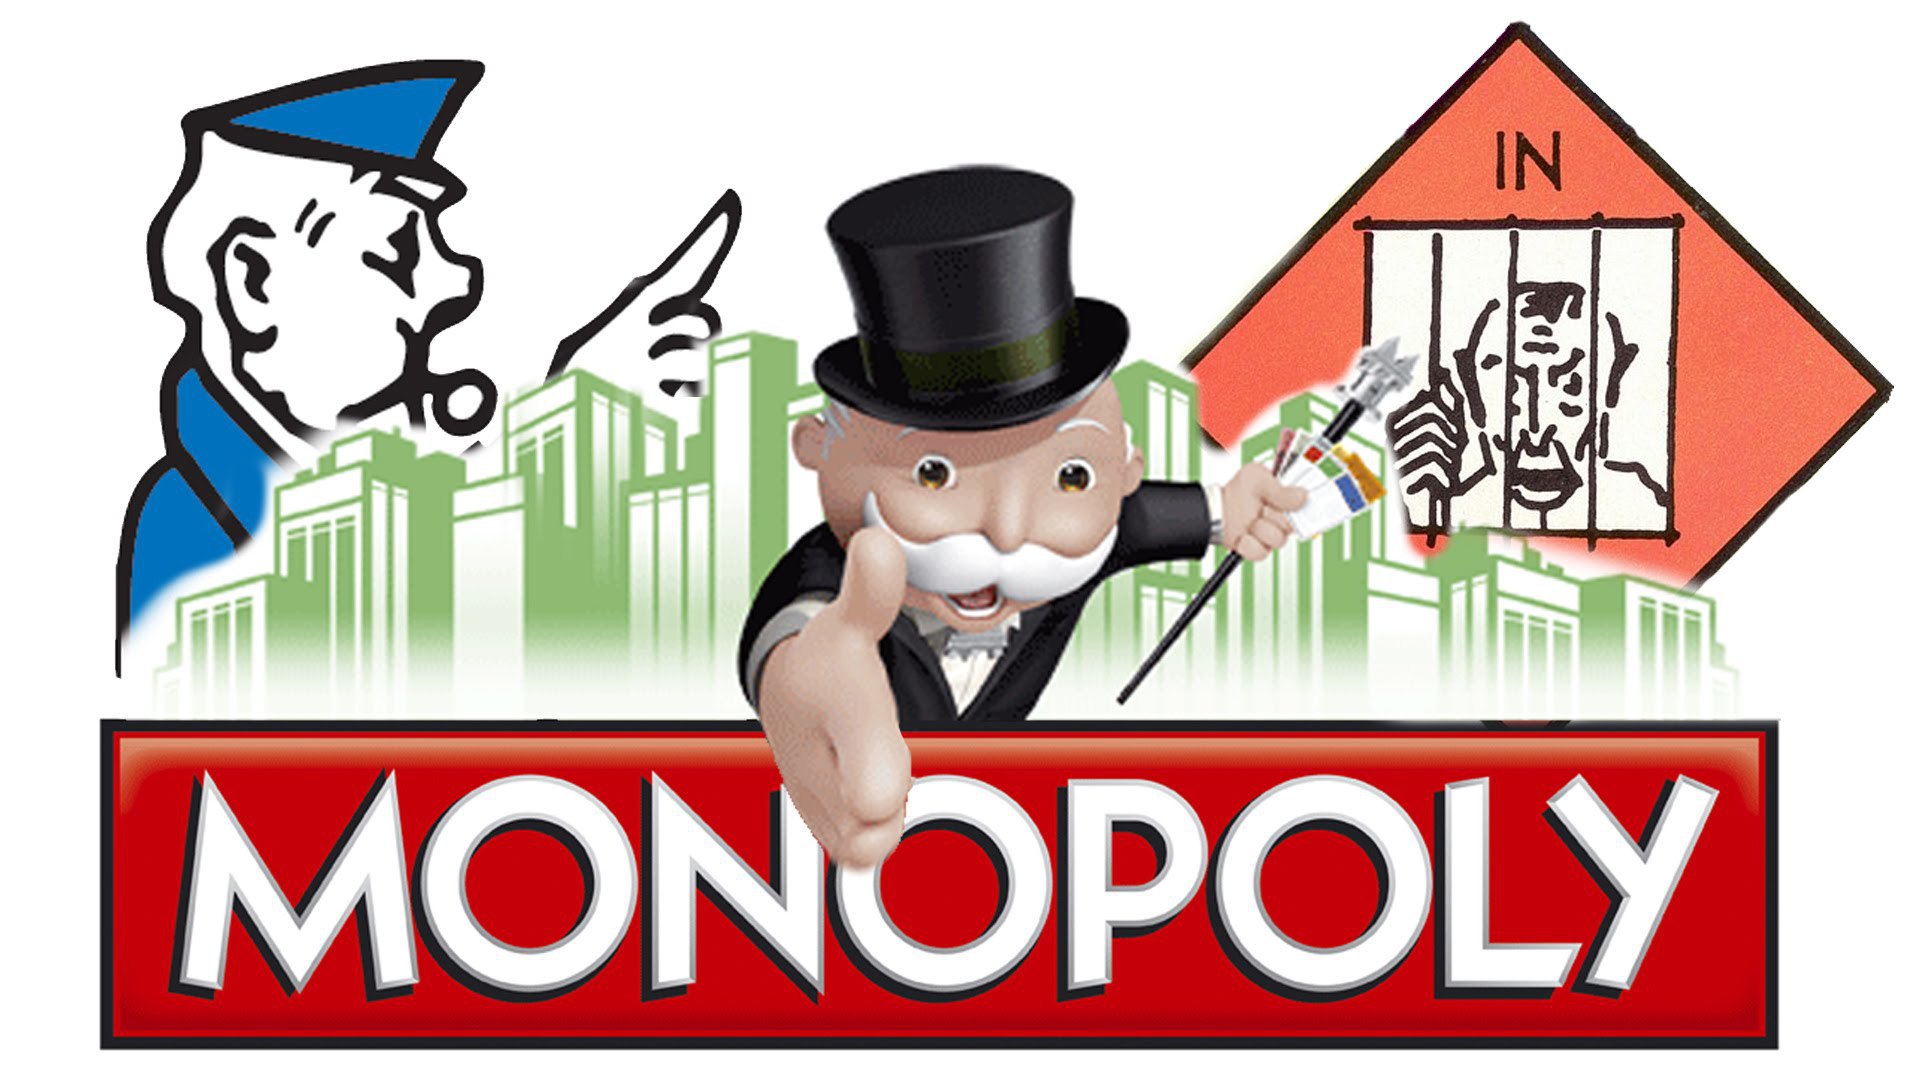 Monopoly Market